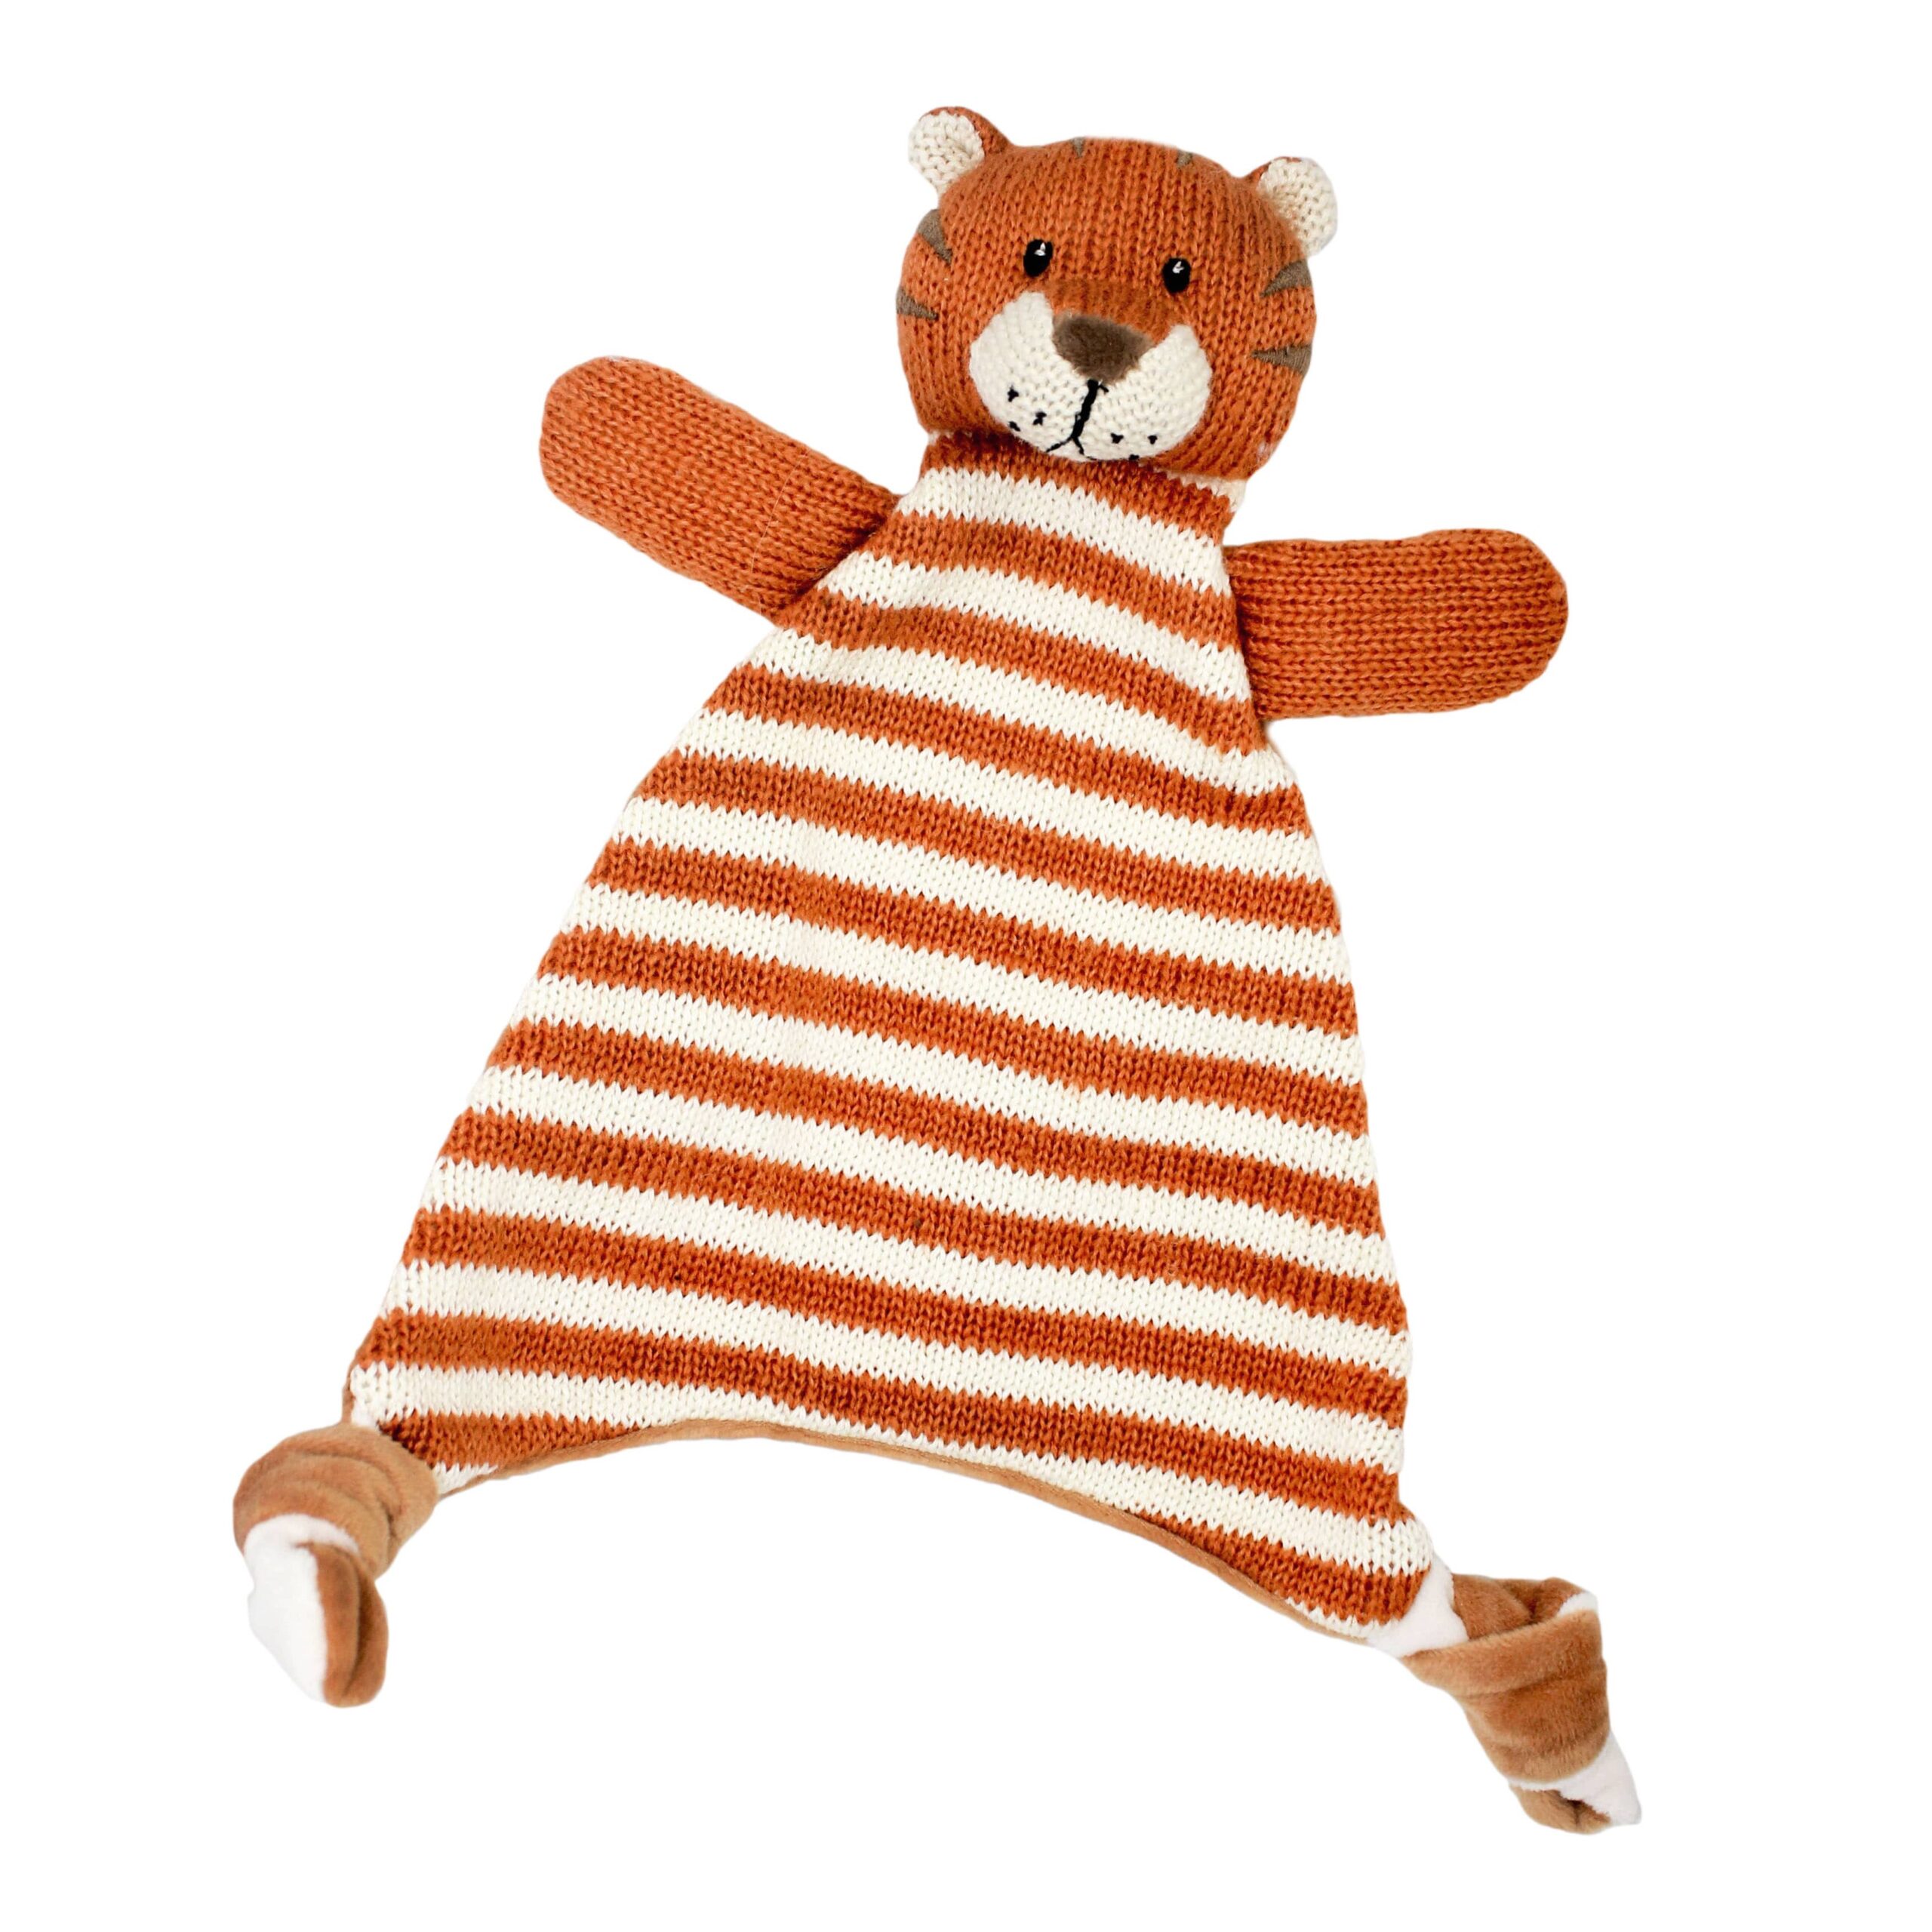 Niko Stripey Tiger comforter toy